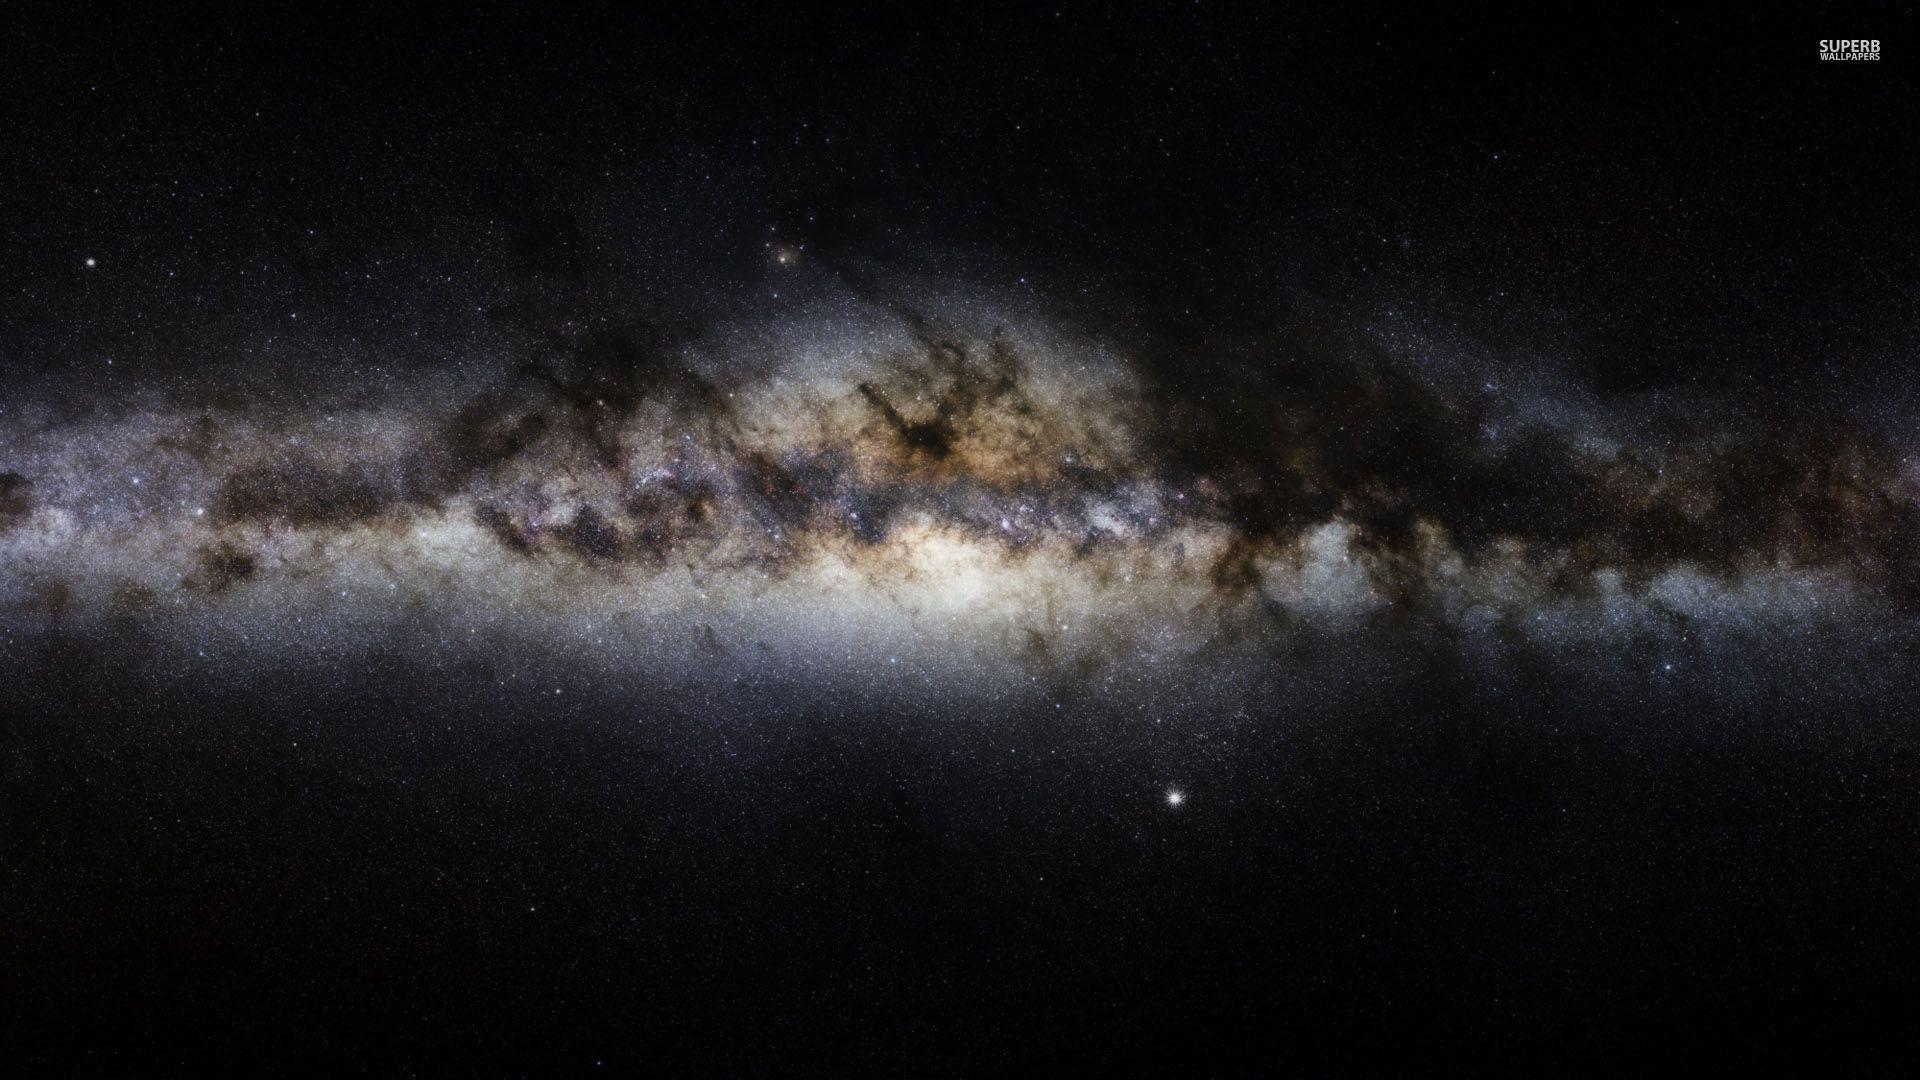 Galaxy wallpaper